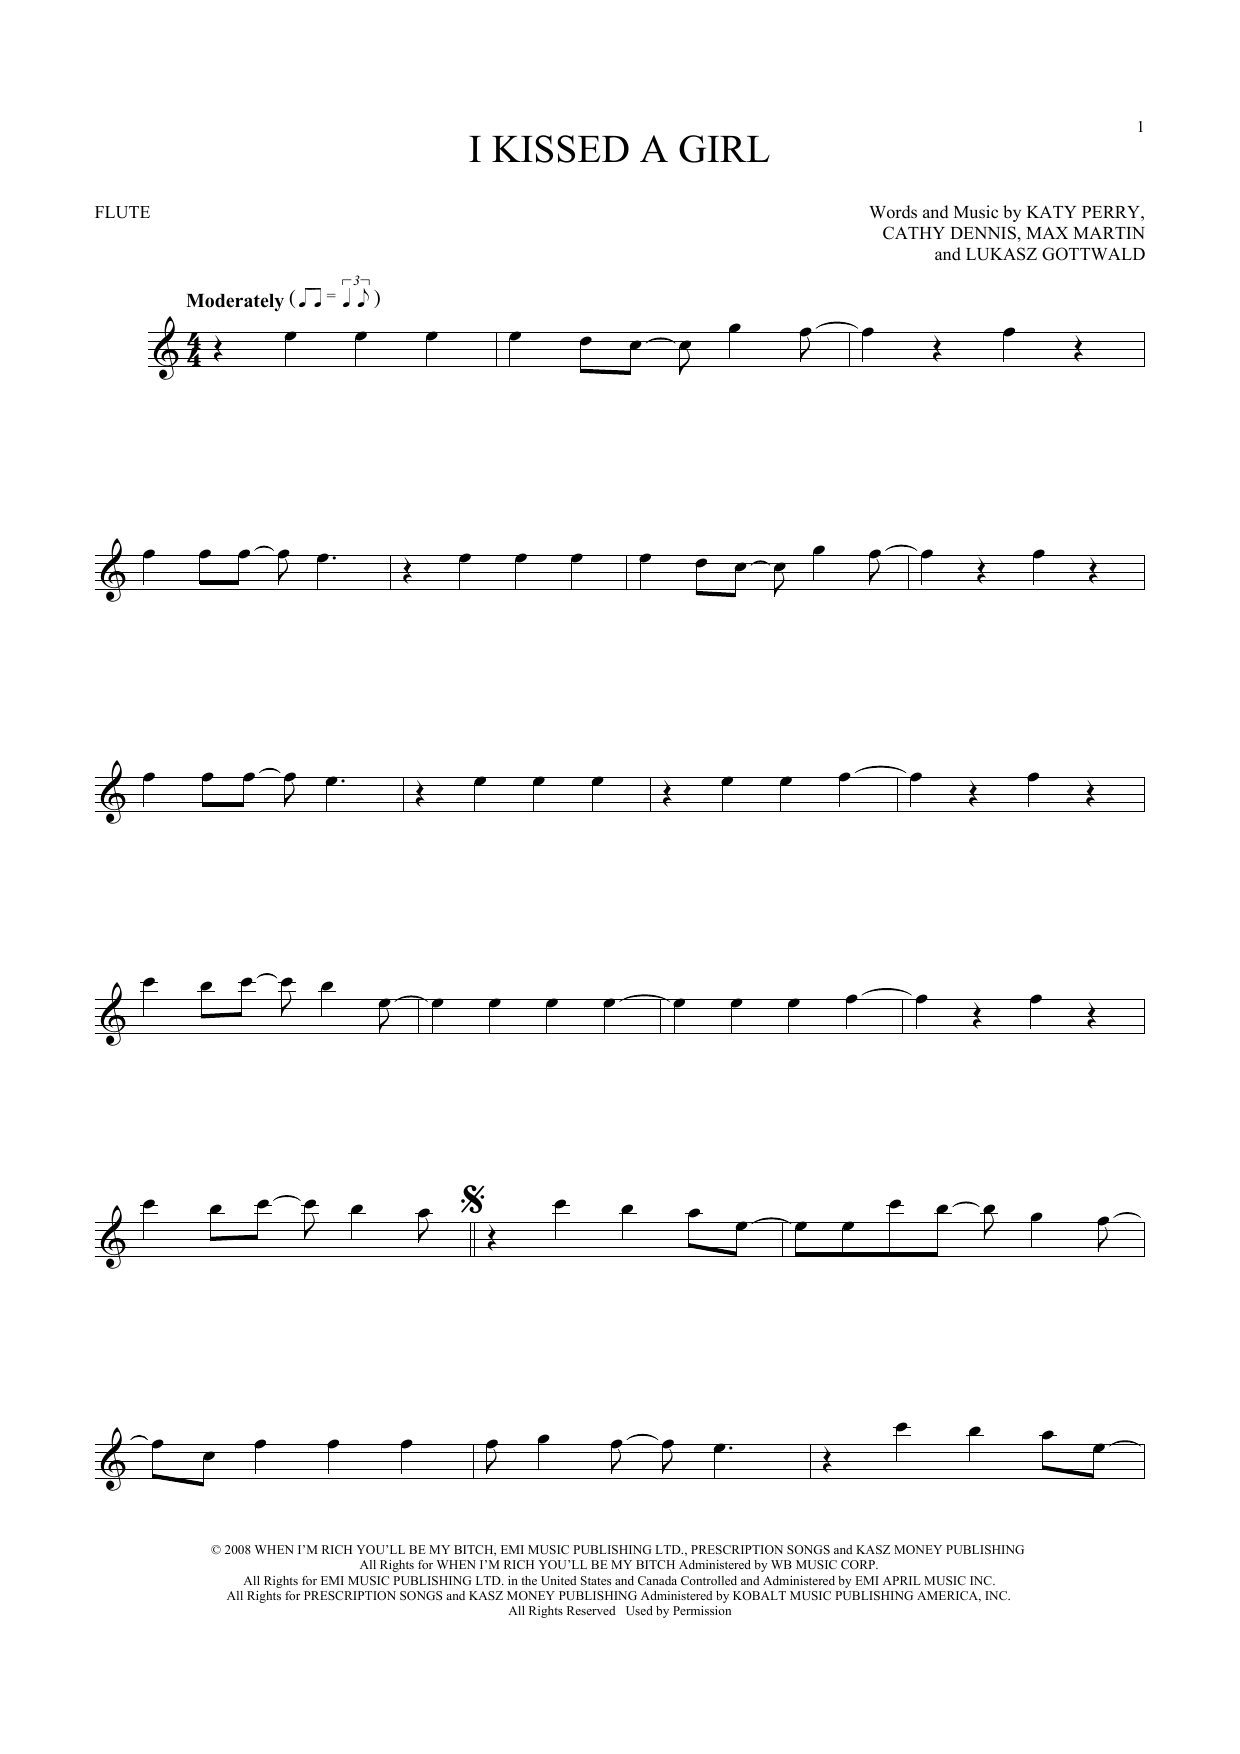 free-printable-flute-sheet-music-for-popular-songs-free-printable